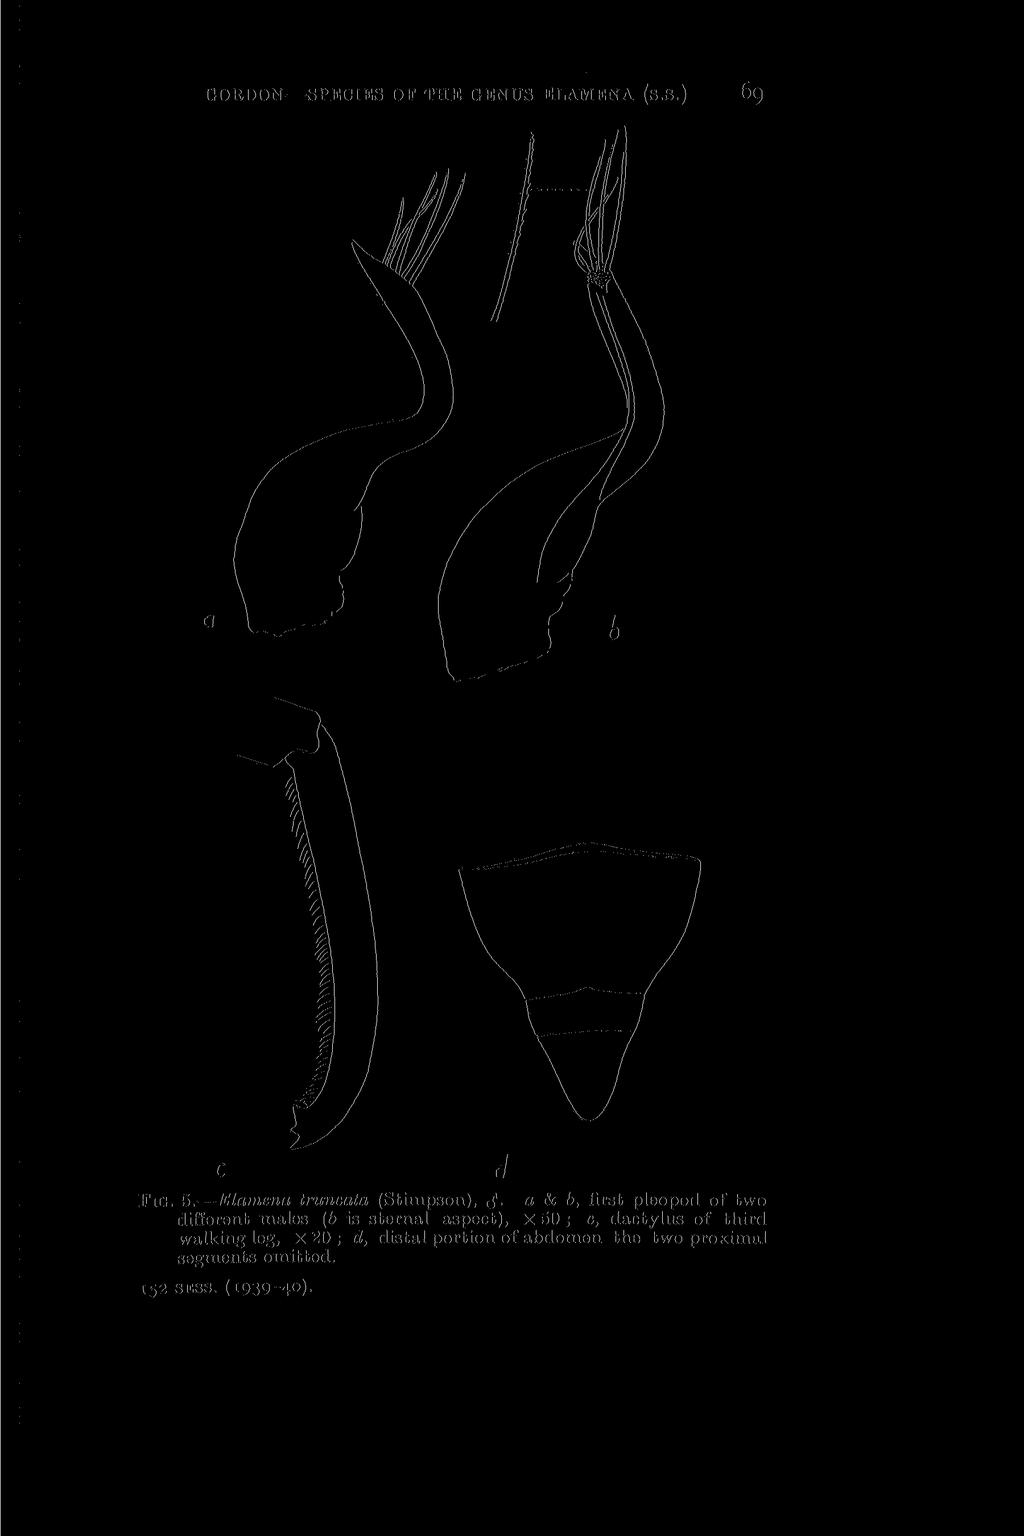 69 GORDON SPECIES OF THE GENUS ELAMENA (s.s.) Fig. 5.' Elamena truncata (Stimpson), <J.